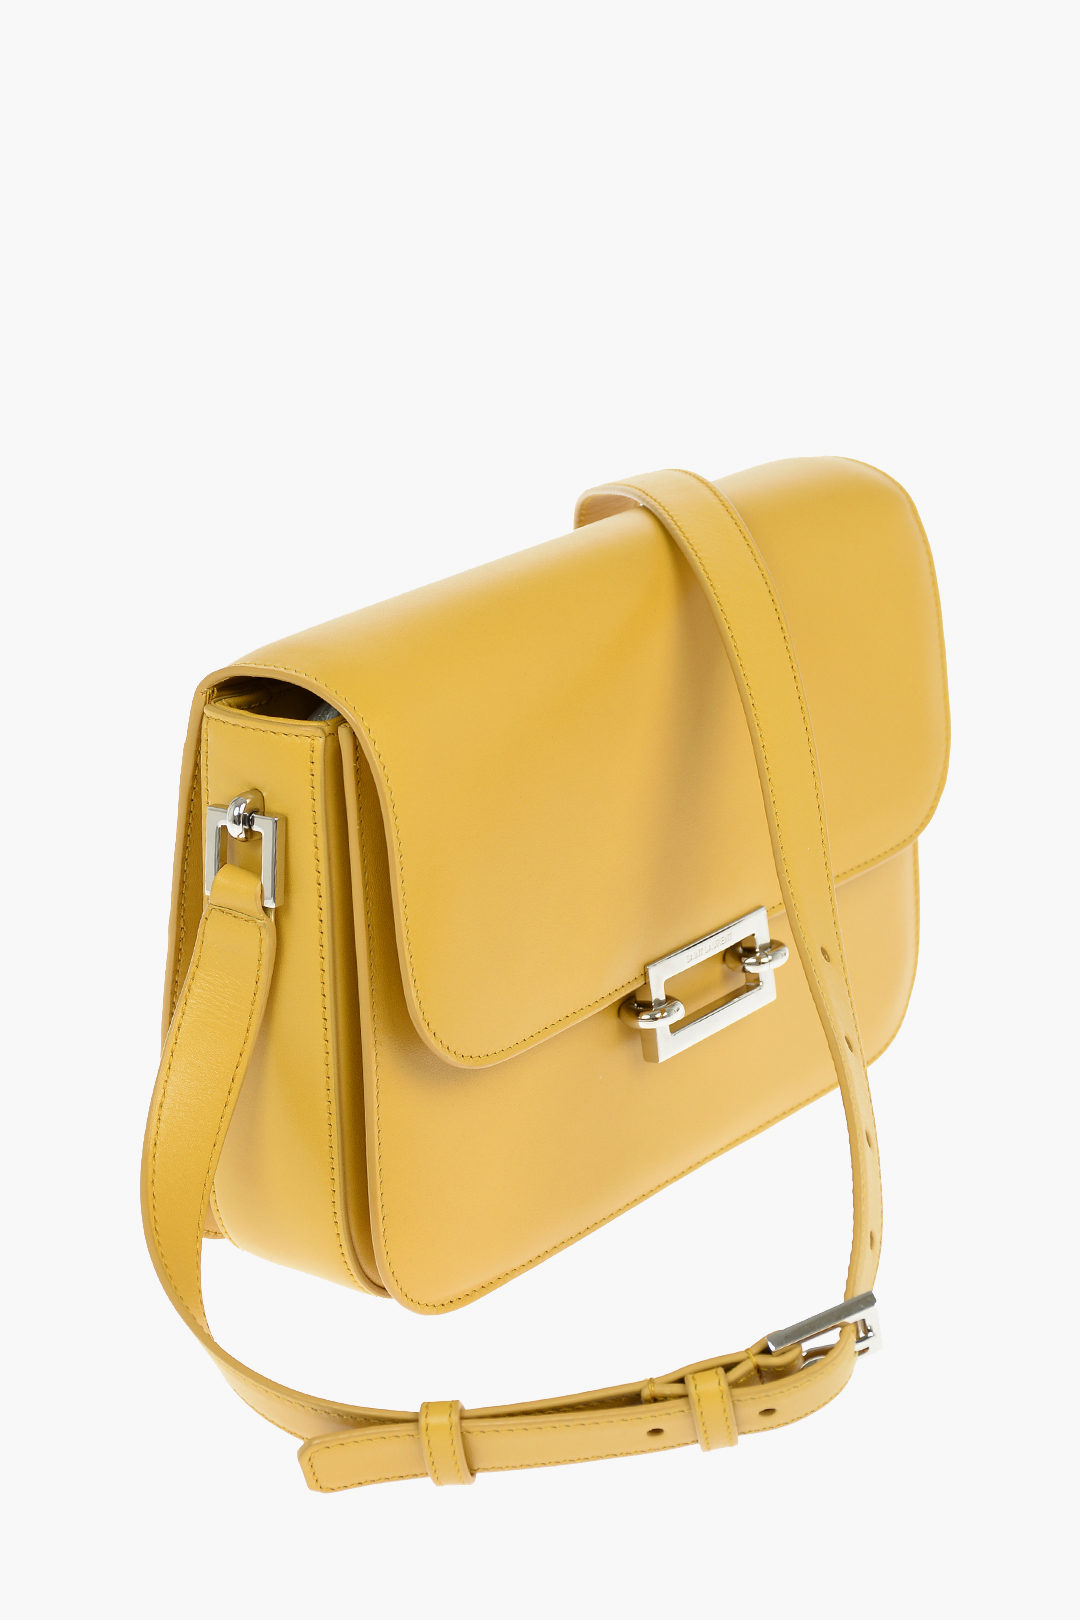 L160 Crossbody Bag In Bright Yellow Soft Lamb Nappa Leather